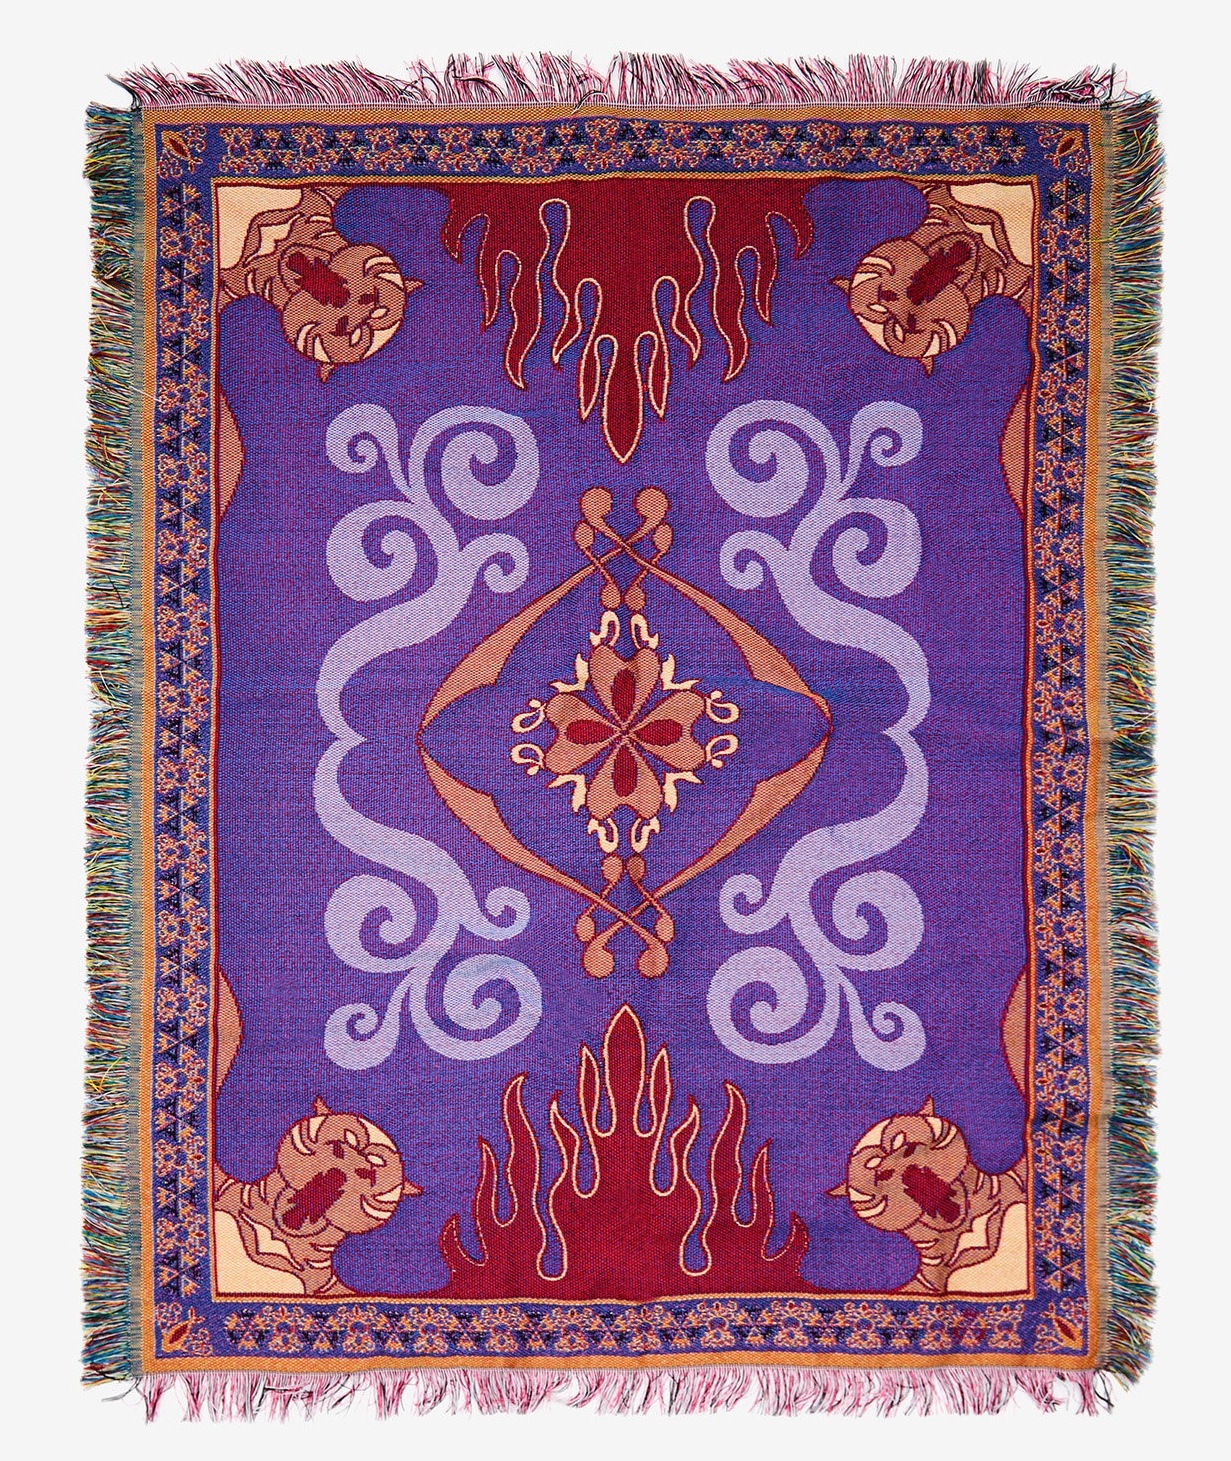 New Disney Aladdin Magic Carpet Woven Tapestry Throw Blanket 48"X60" eBay